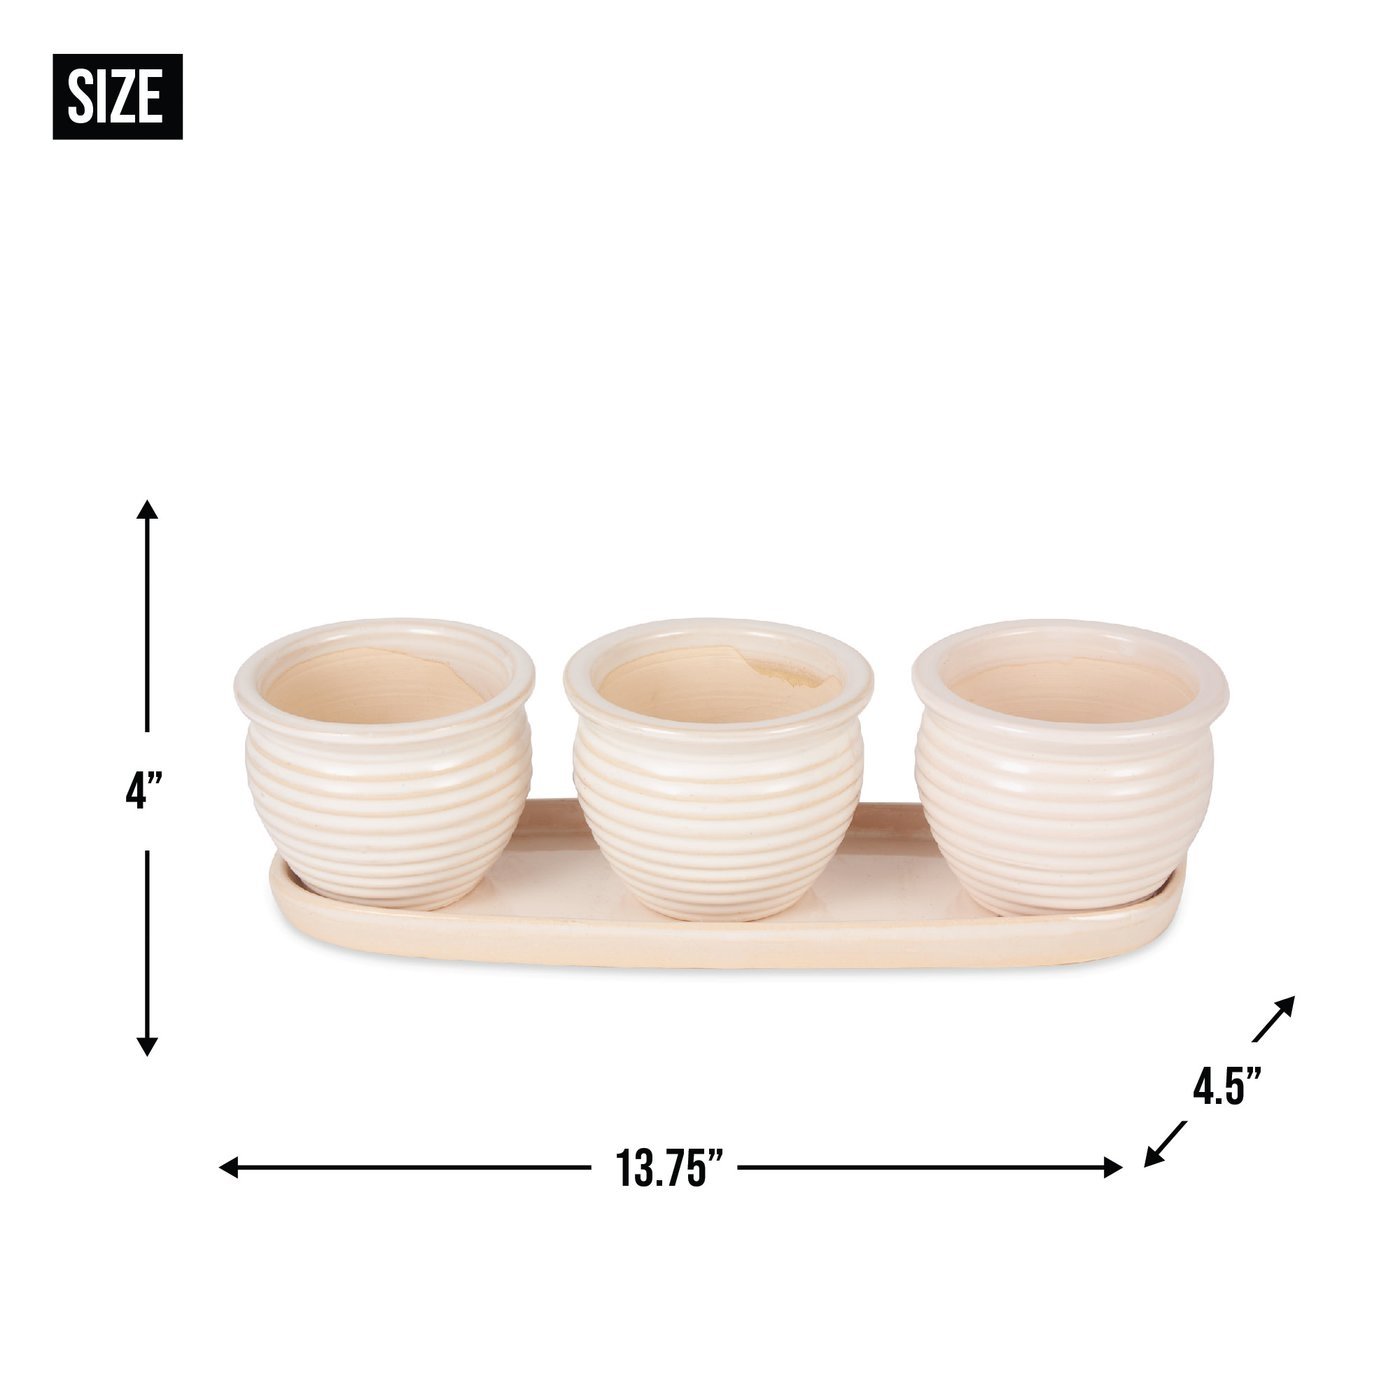 Ceramic Mini Planter Set - Ivory Round - Ethereal Company